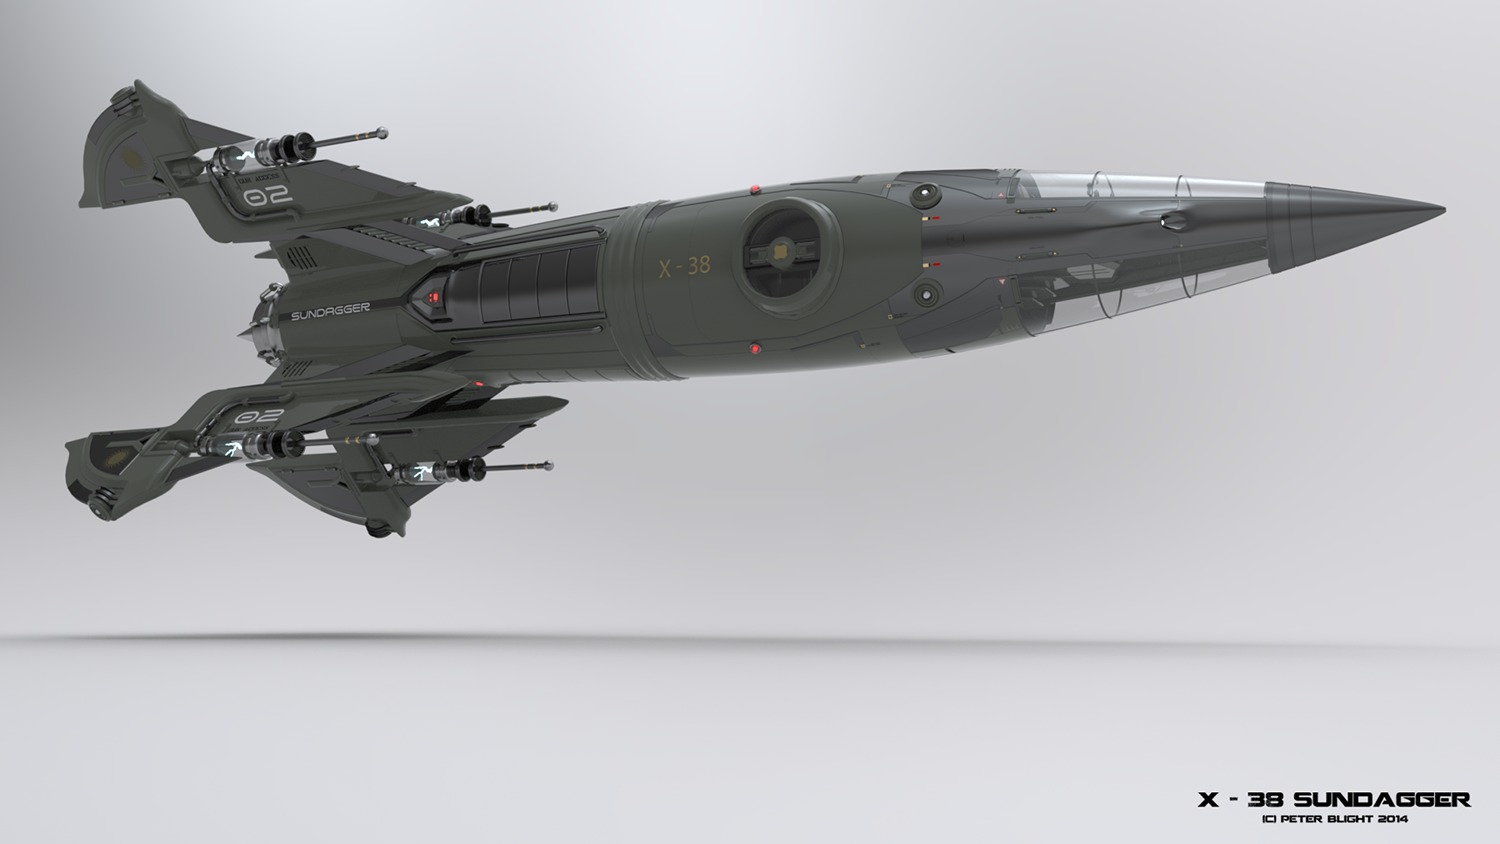 X-38 Sundagger